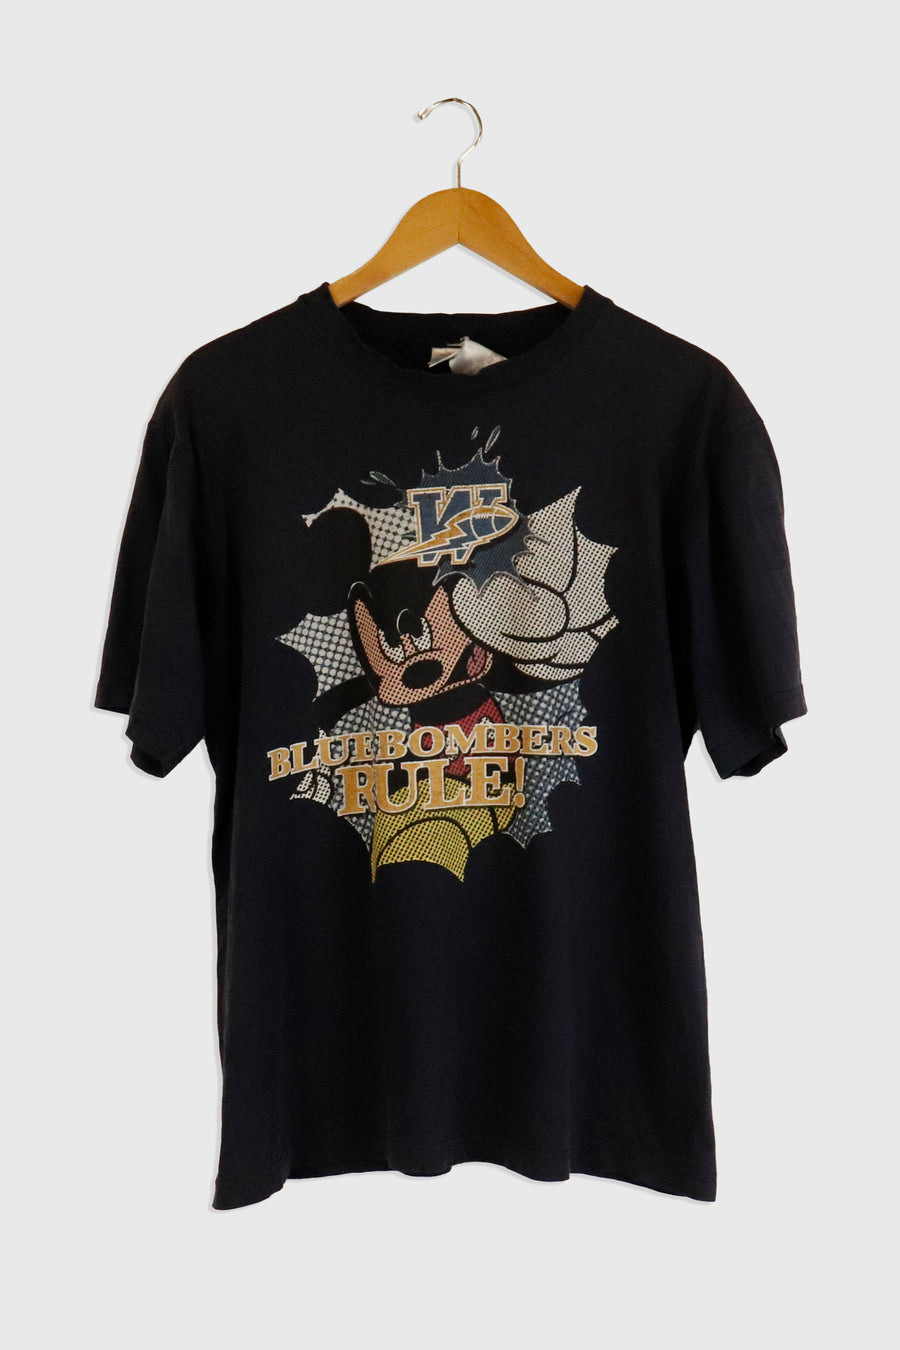 Vintage Blue Bombers Disney T Shirt